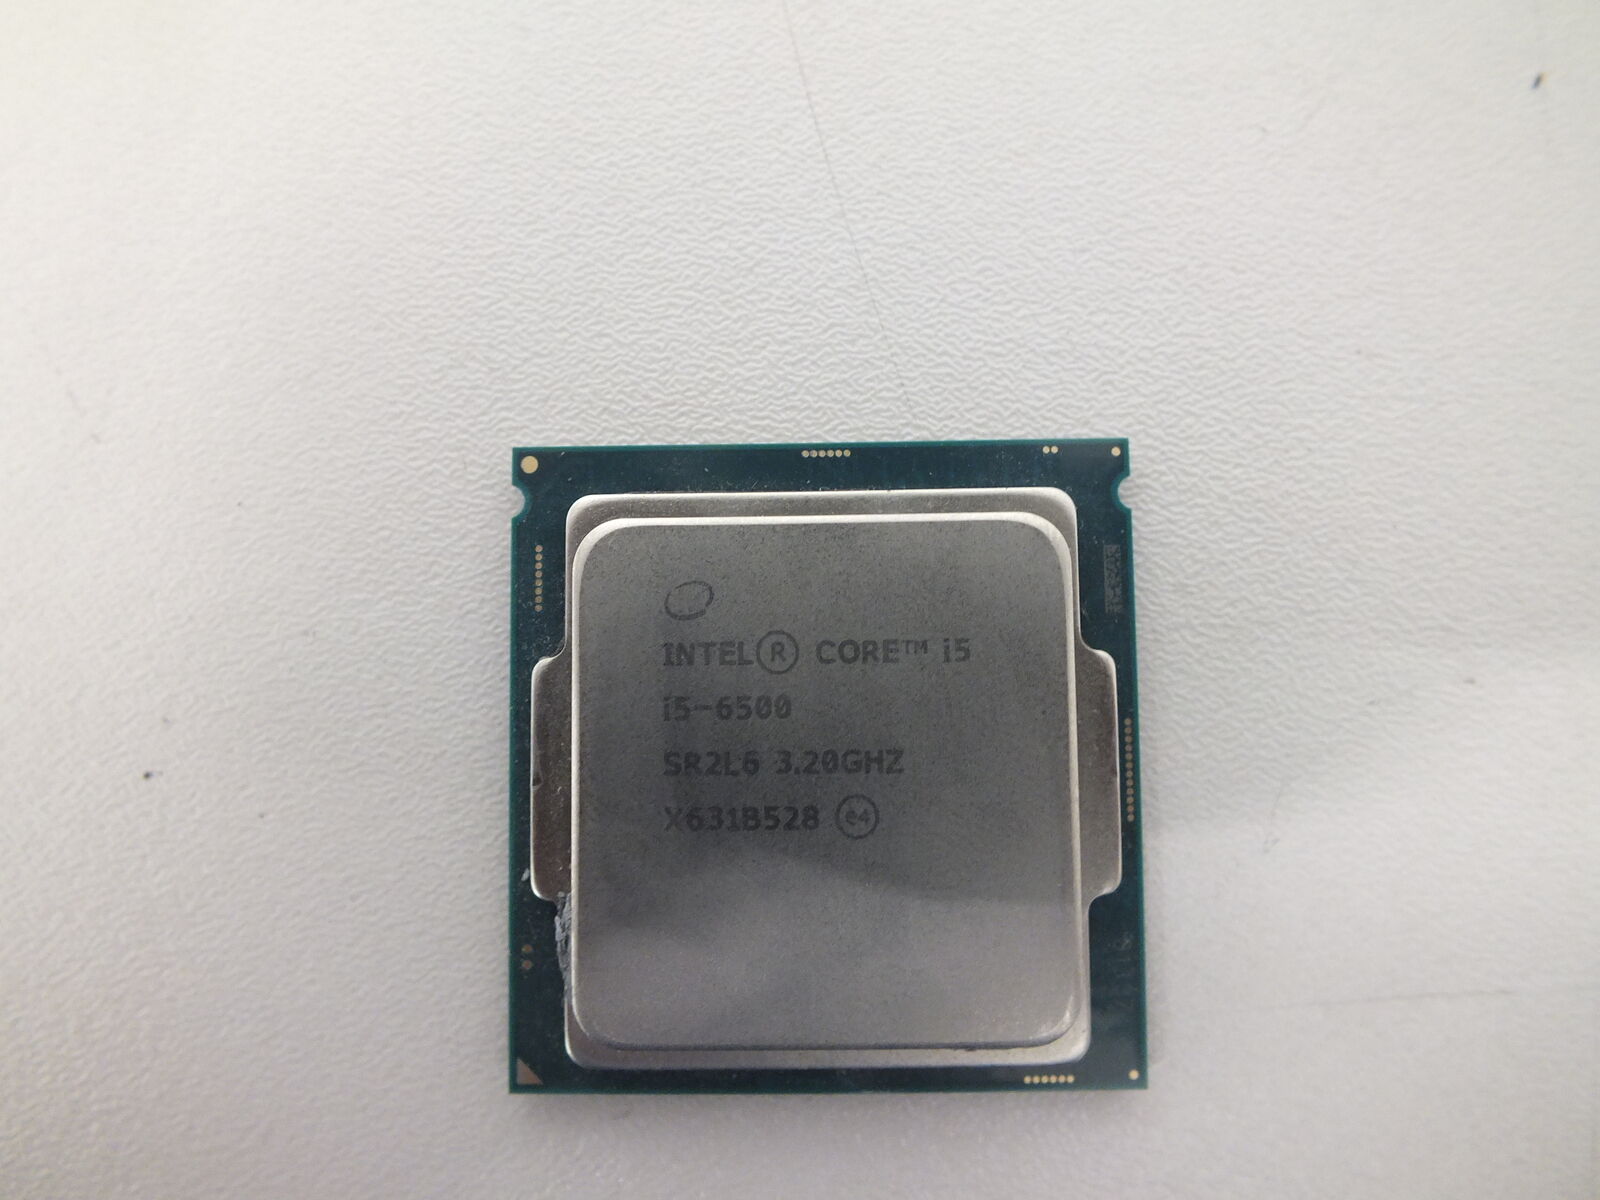 [ LOT OF 15 ] Intel Core i5-6500 SR2L6 3.20 GHZ Processor